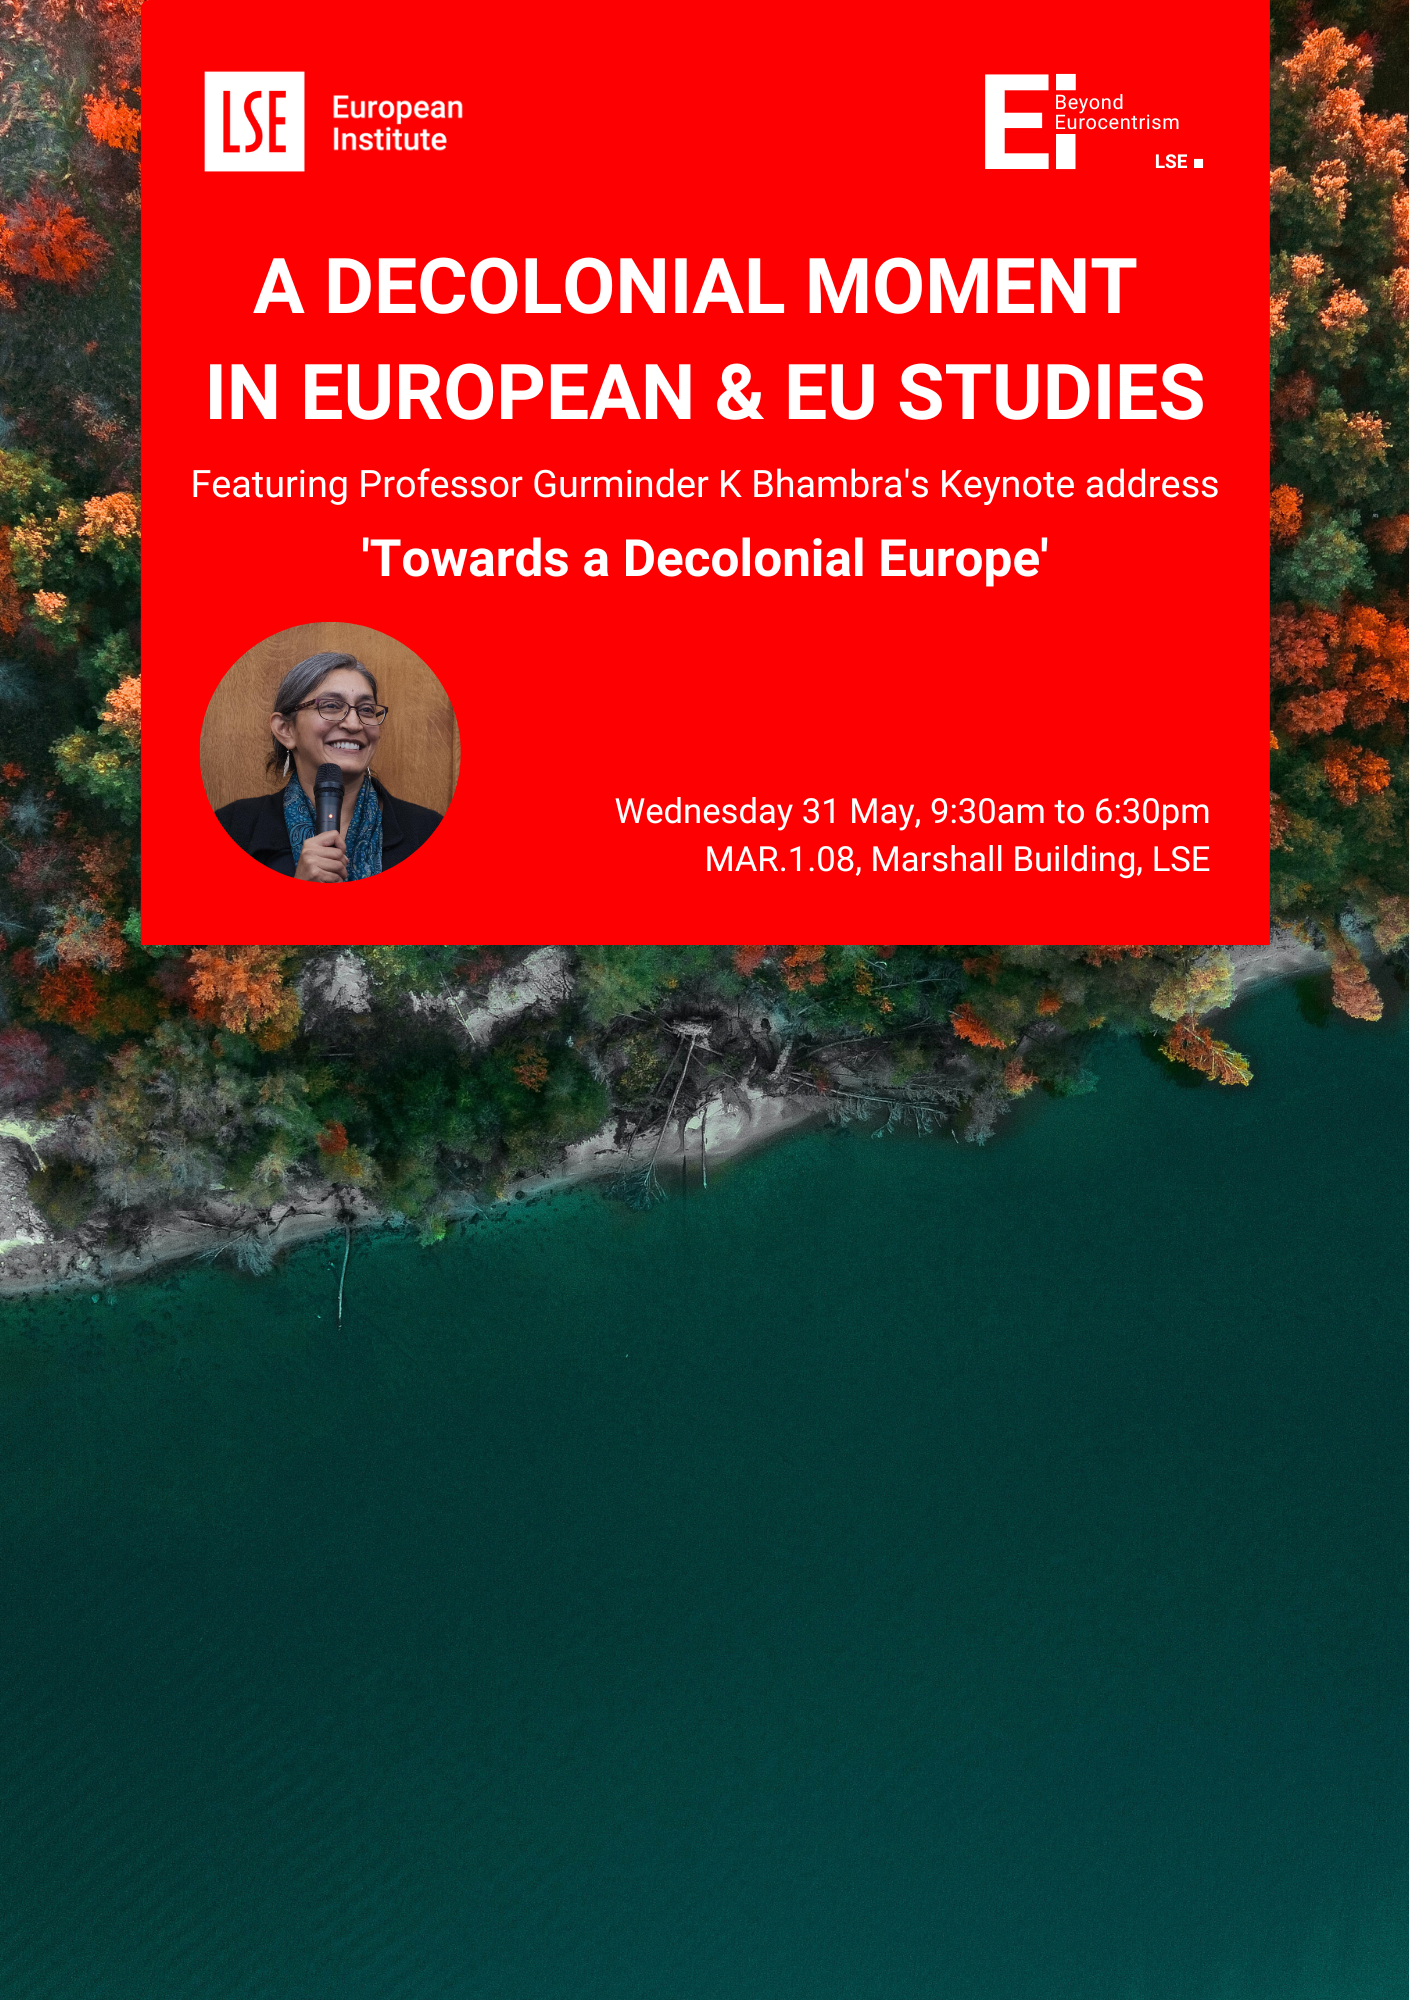 A DECOLONIAL MOMENT IN EUROPEAN & EU STUDIES